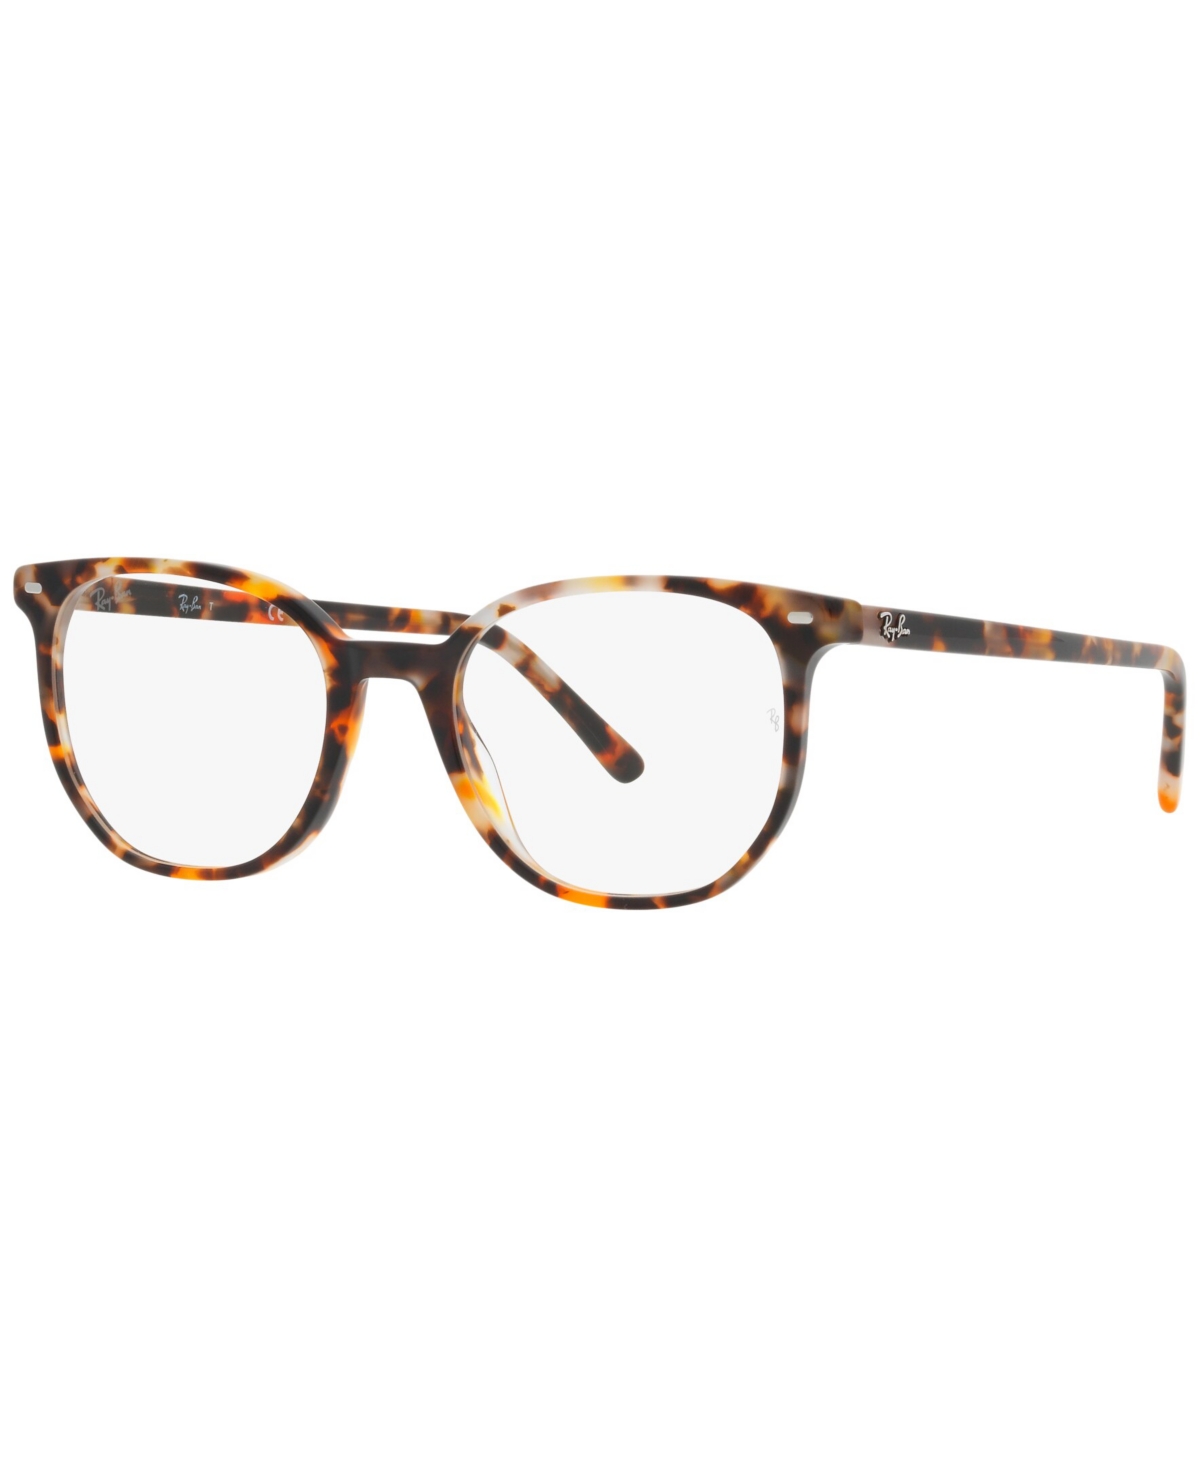 RB5397 Elliot Unisex Irregular Eyeglasses - Yellow and Blue Havana